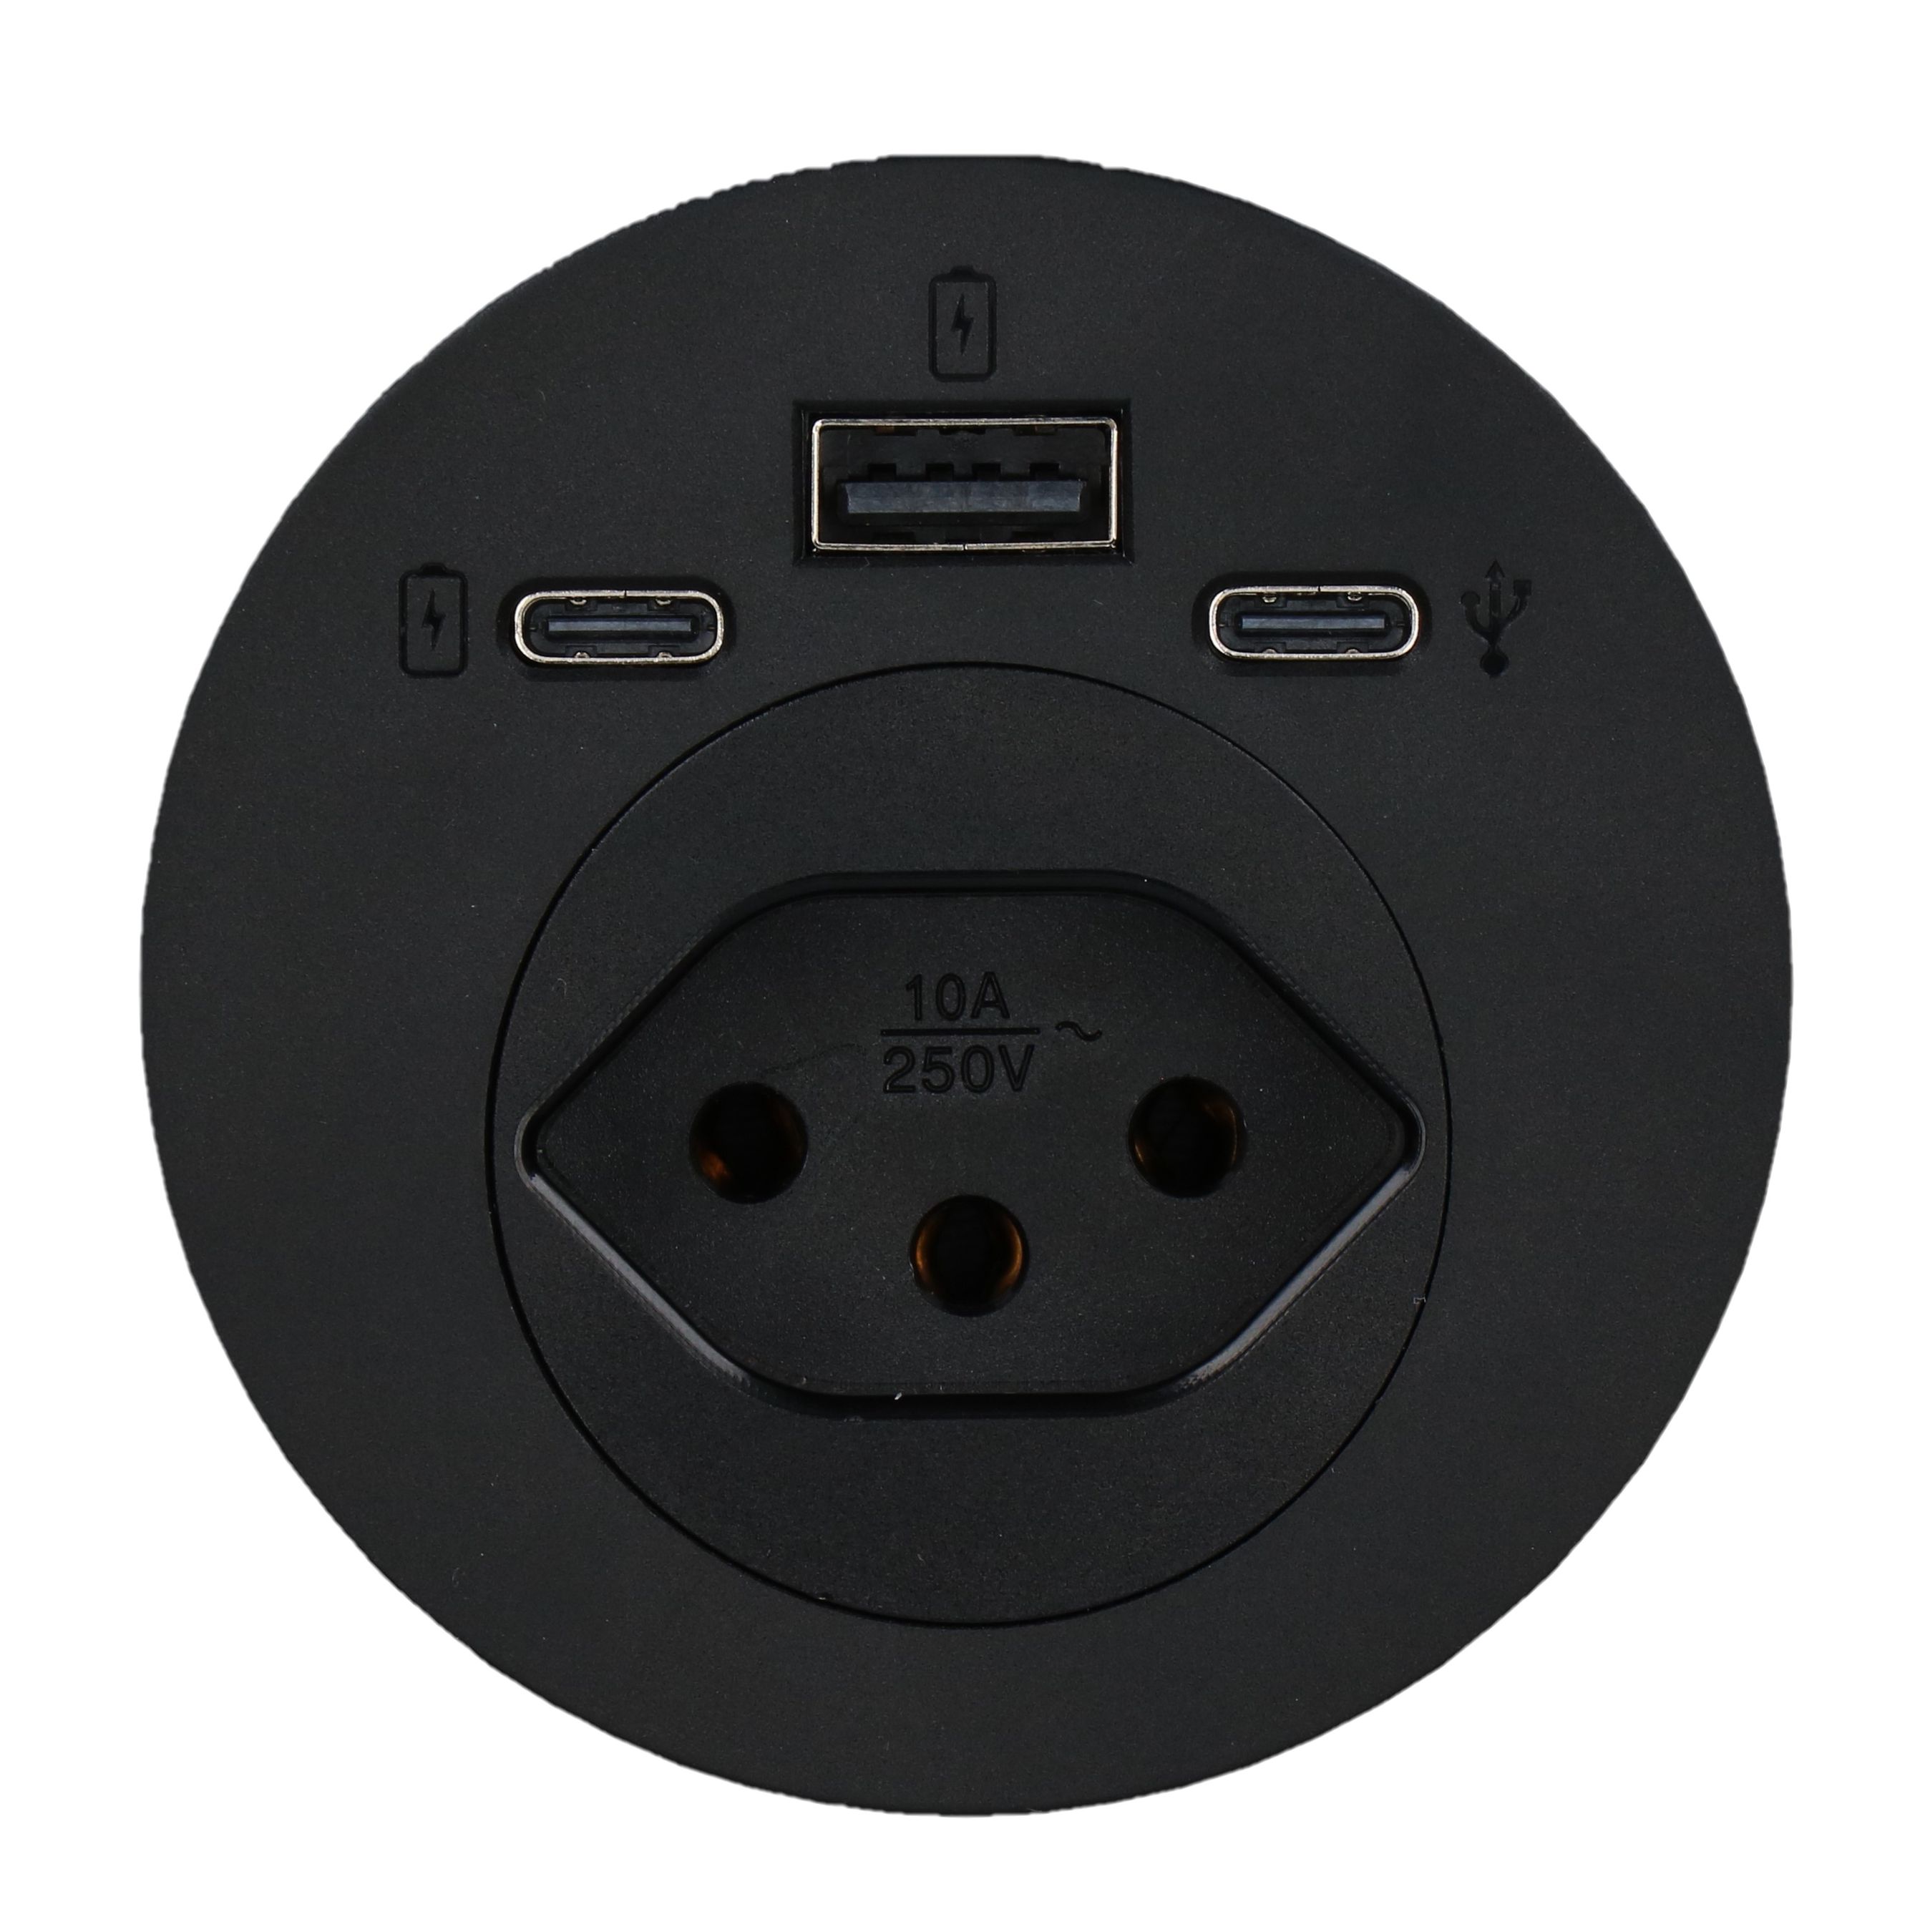 Power grommet black, 1x T13, USB A+C, USB C data